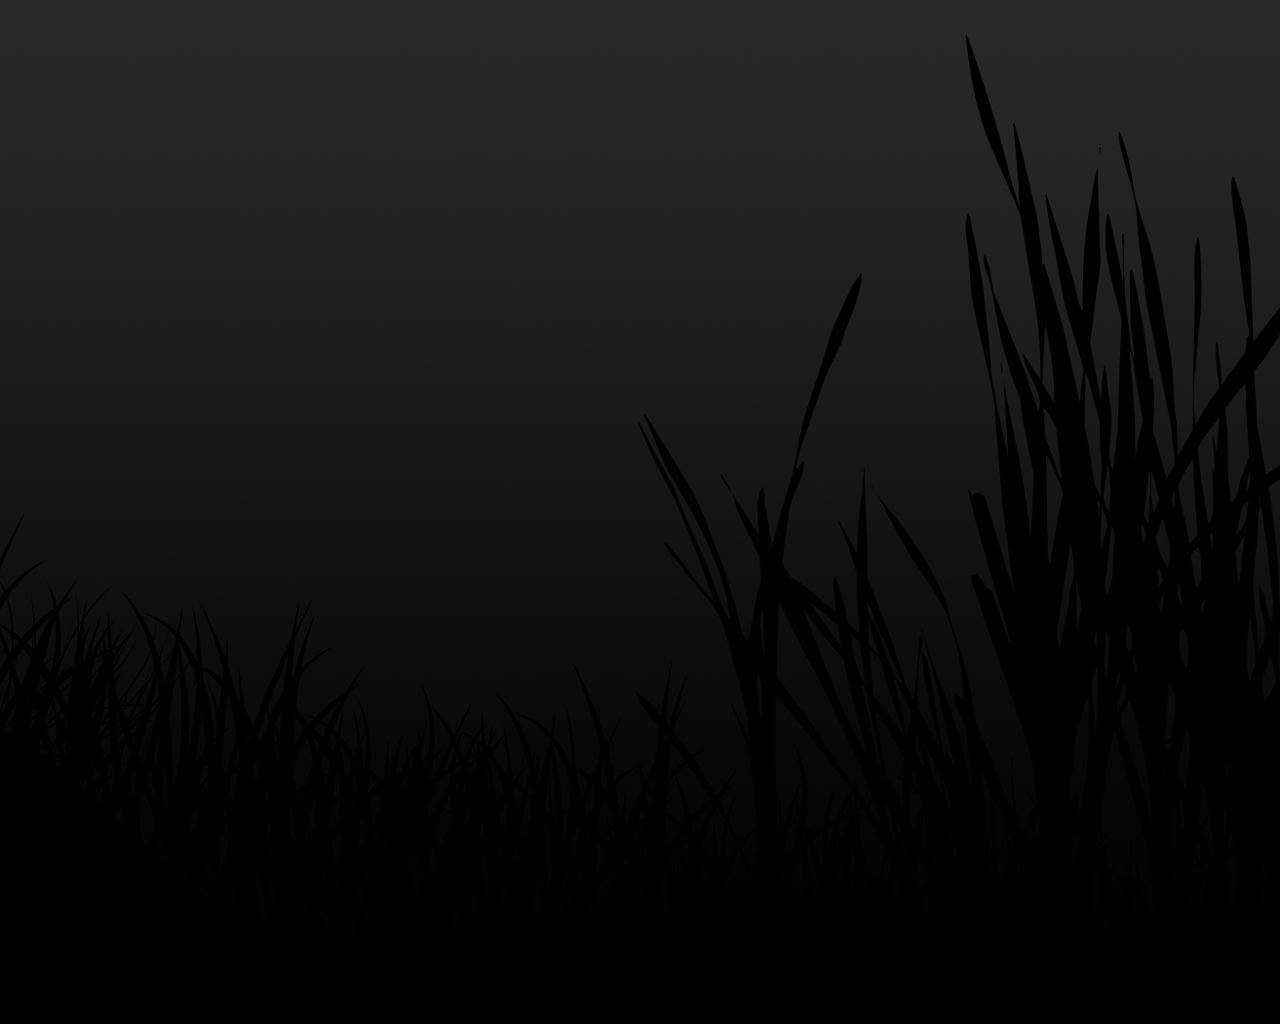 Plain Black Grass Pattern Background